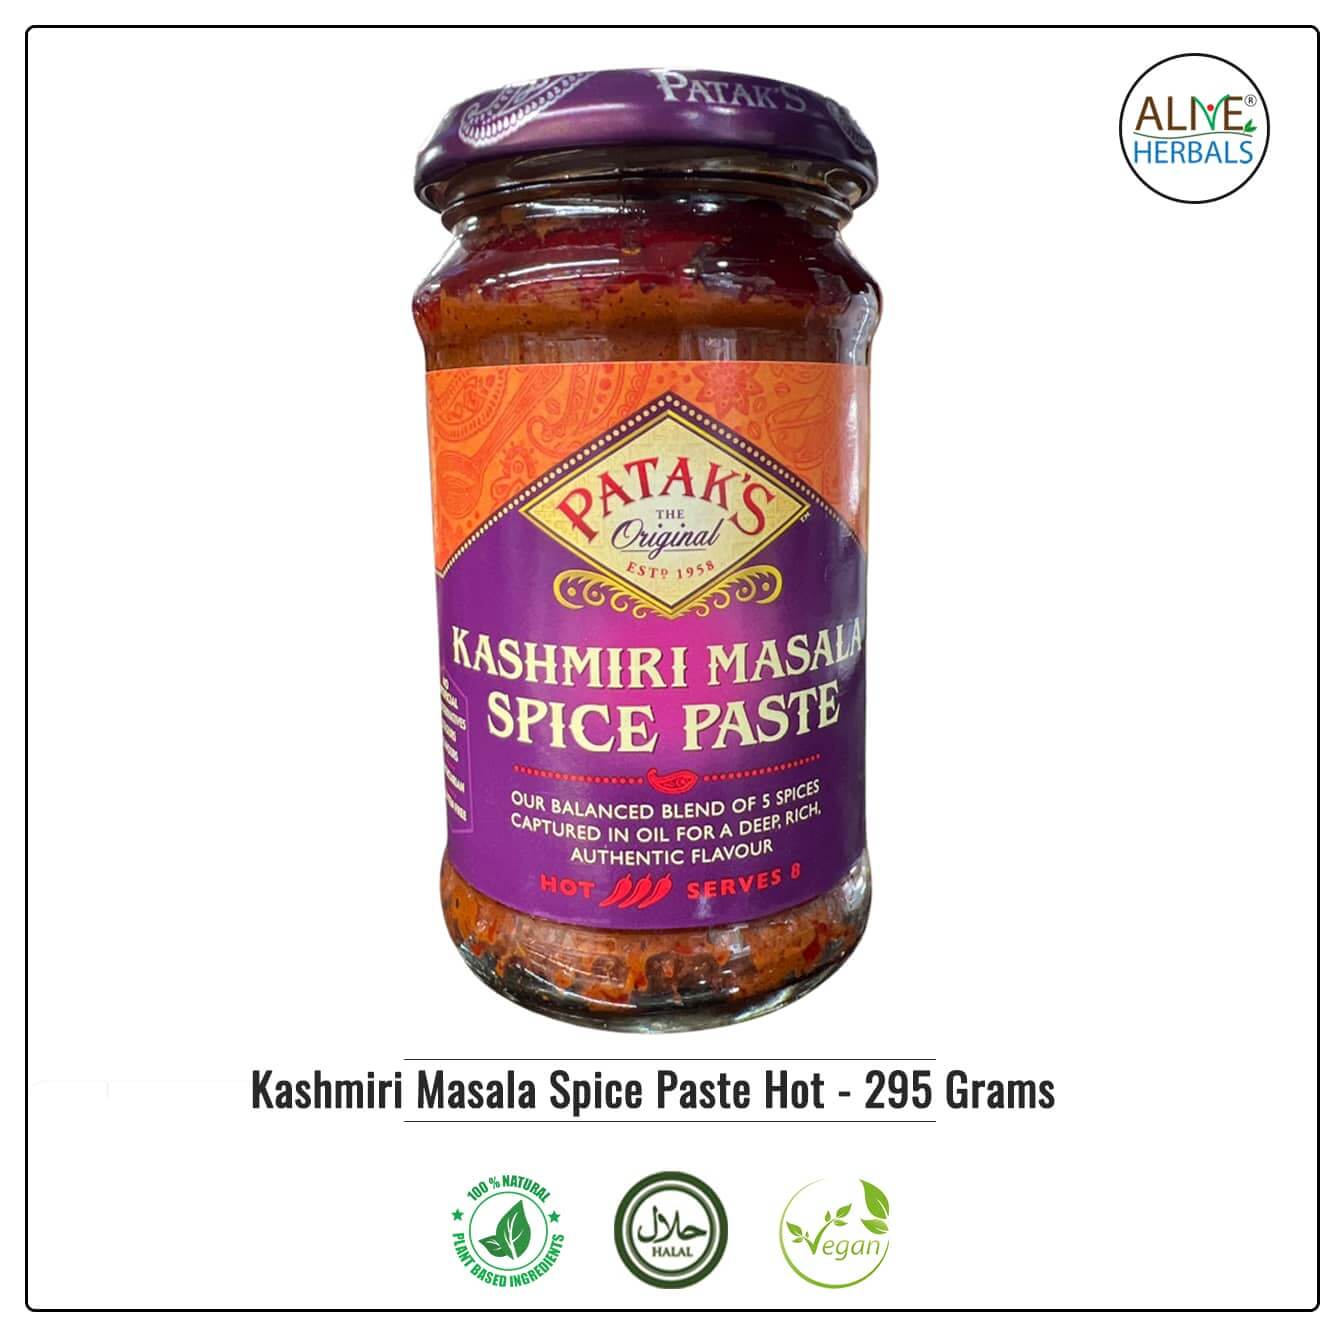 Kashmiri Masala Spice Paste Hot - Alive Herbals